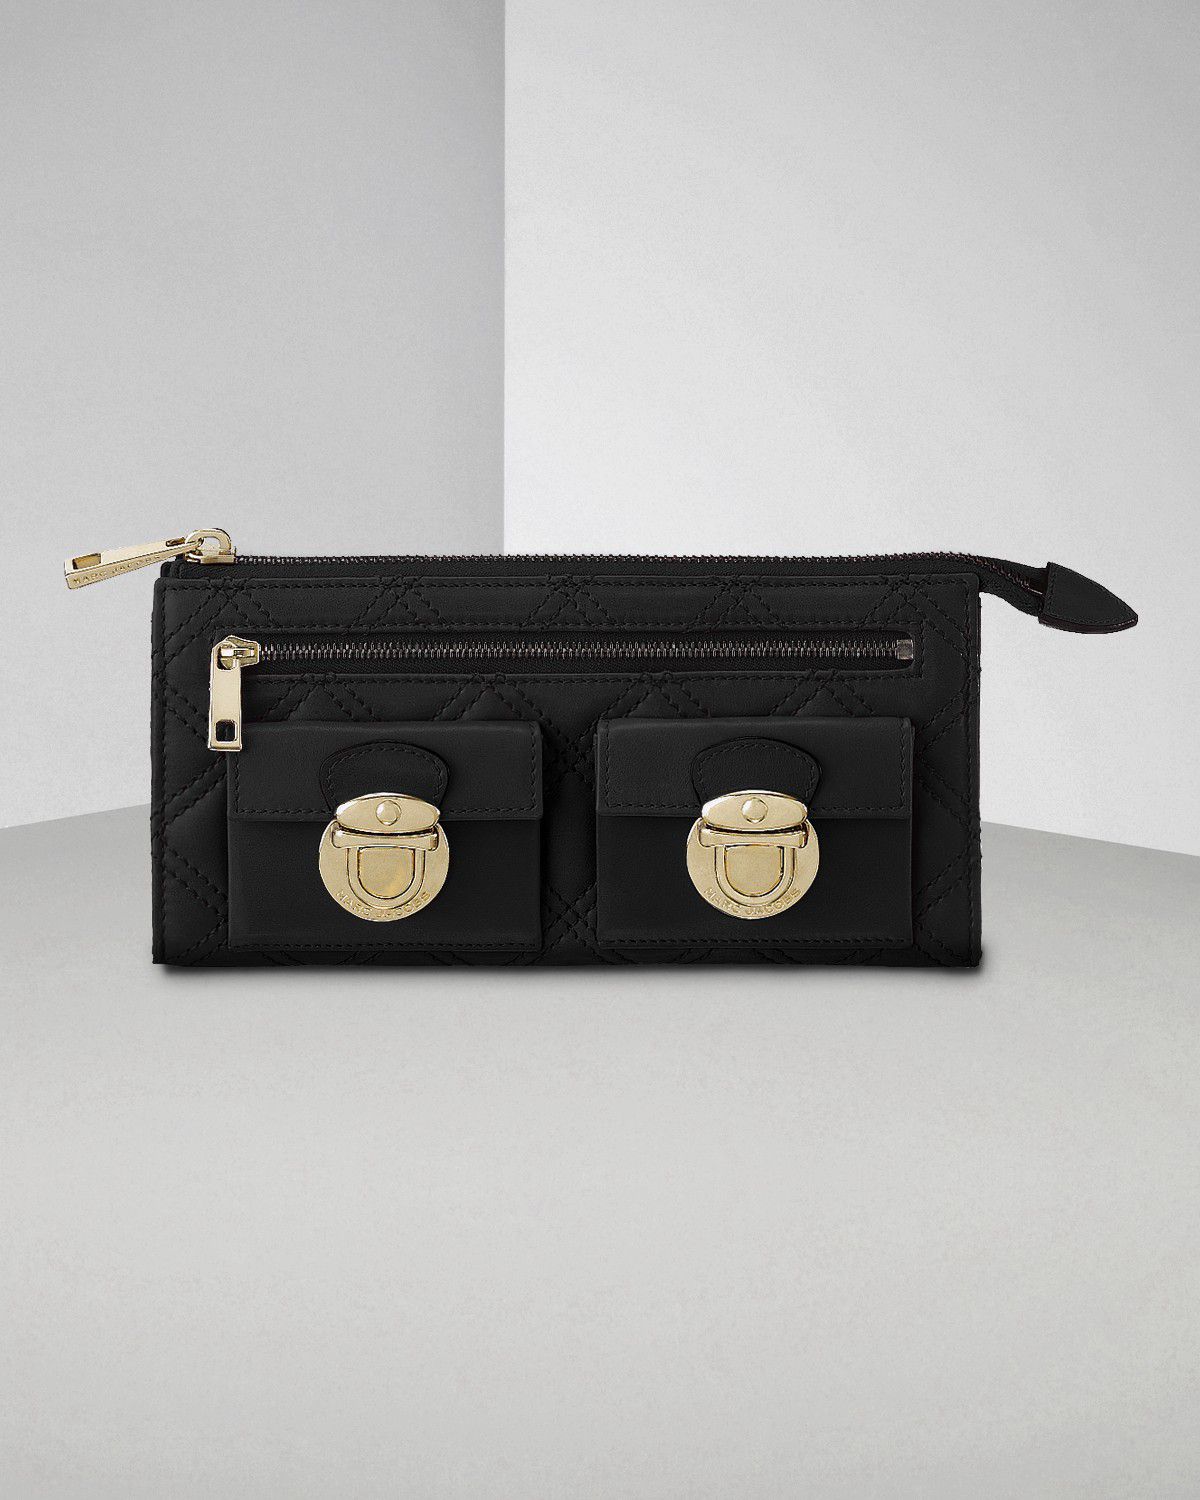 Marc Jacobs Quilted Zip Clutch Wallet in Black/Brass (Black) | Lyst